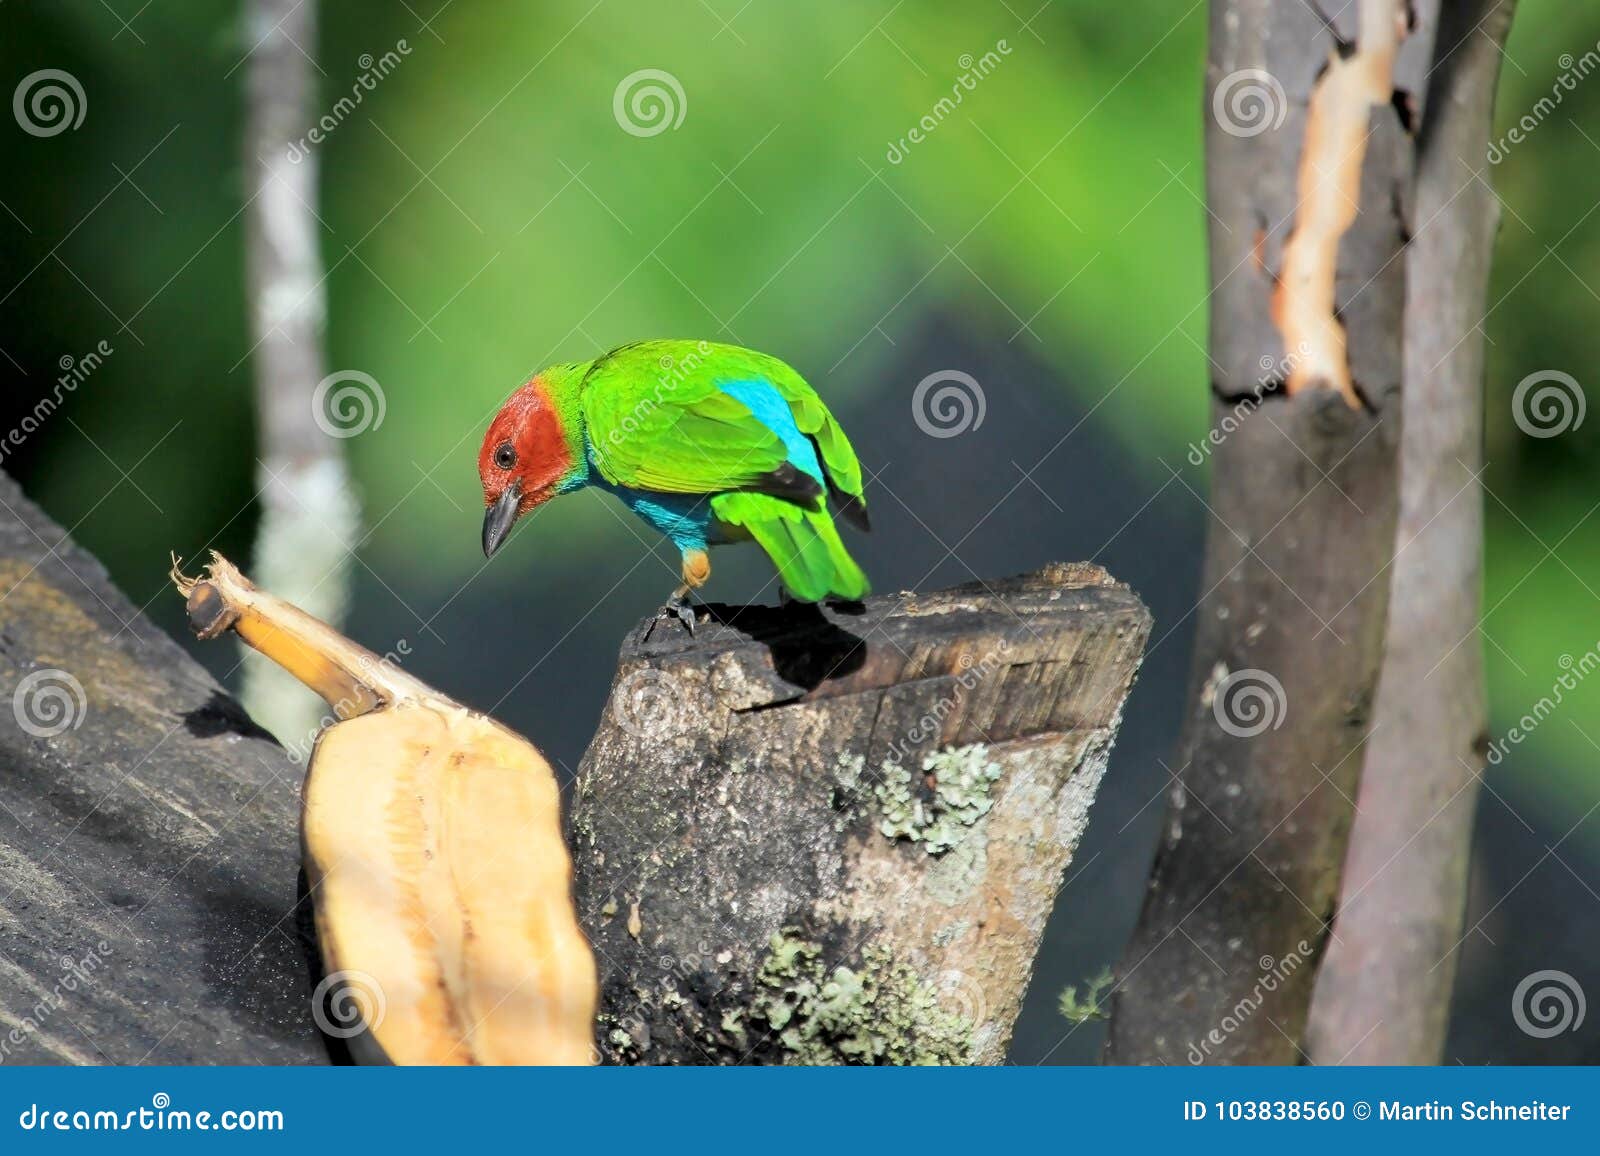 bay-headed tanager, tangara gyrola toddi, beautiful red green and blue songbird, el jardin, colombia